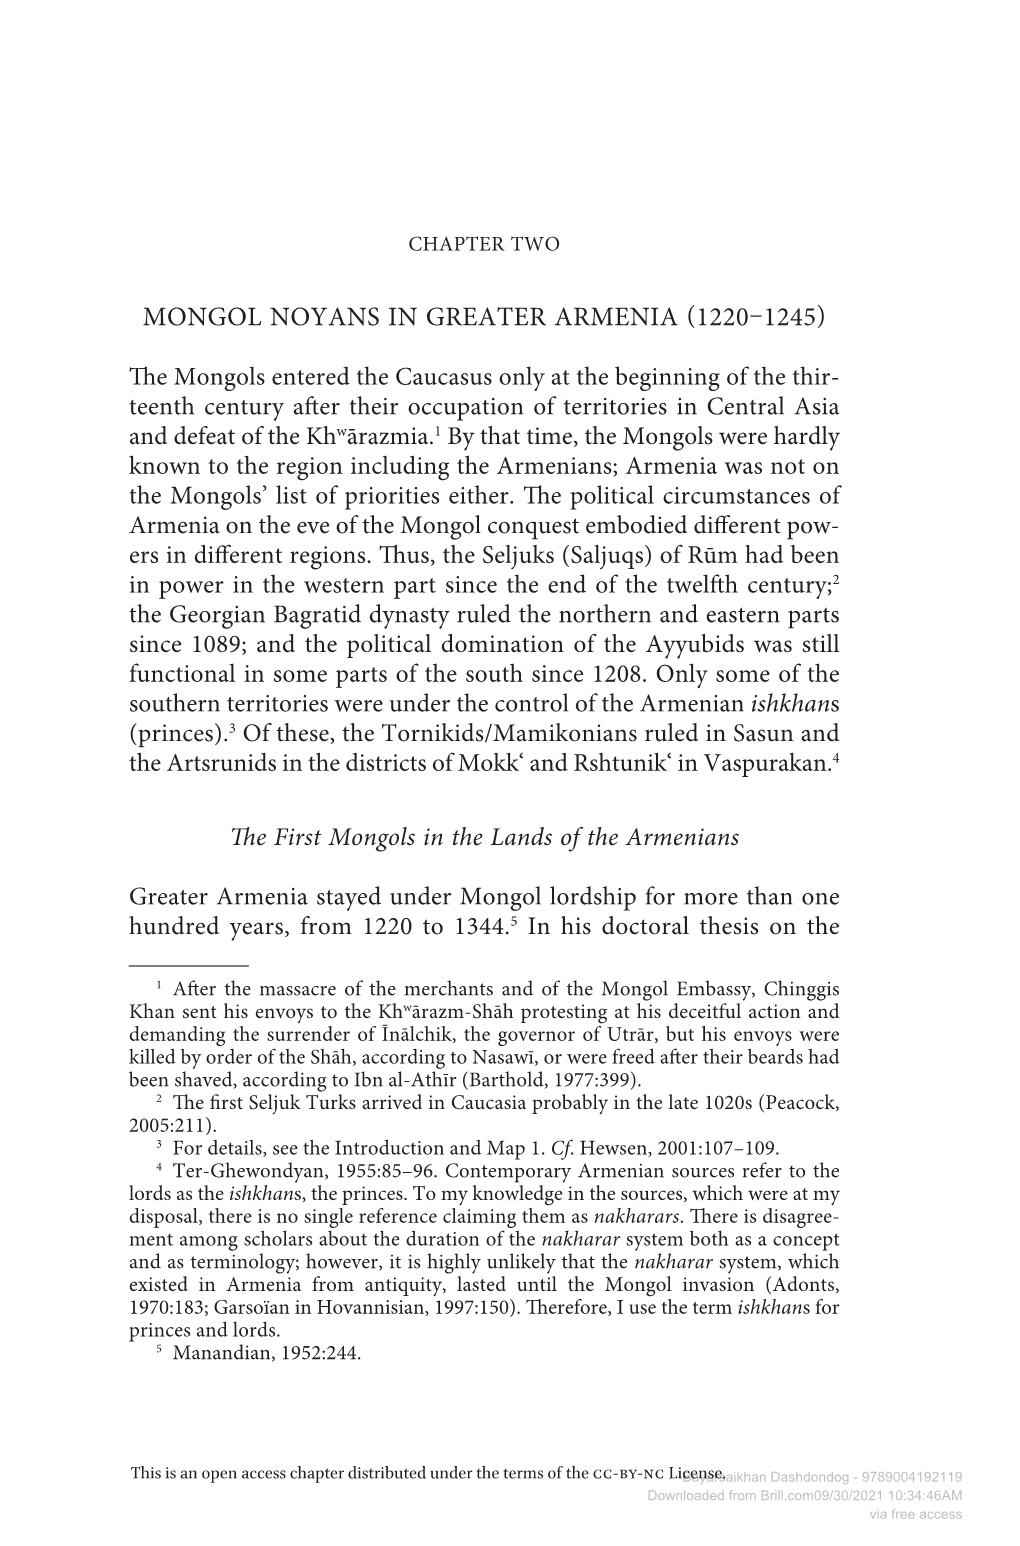 Mongol Noyans in Greater Armenia 1220 1245